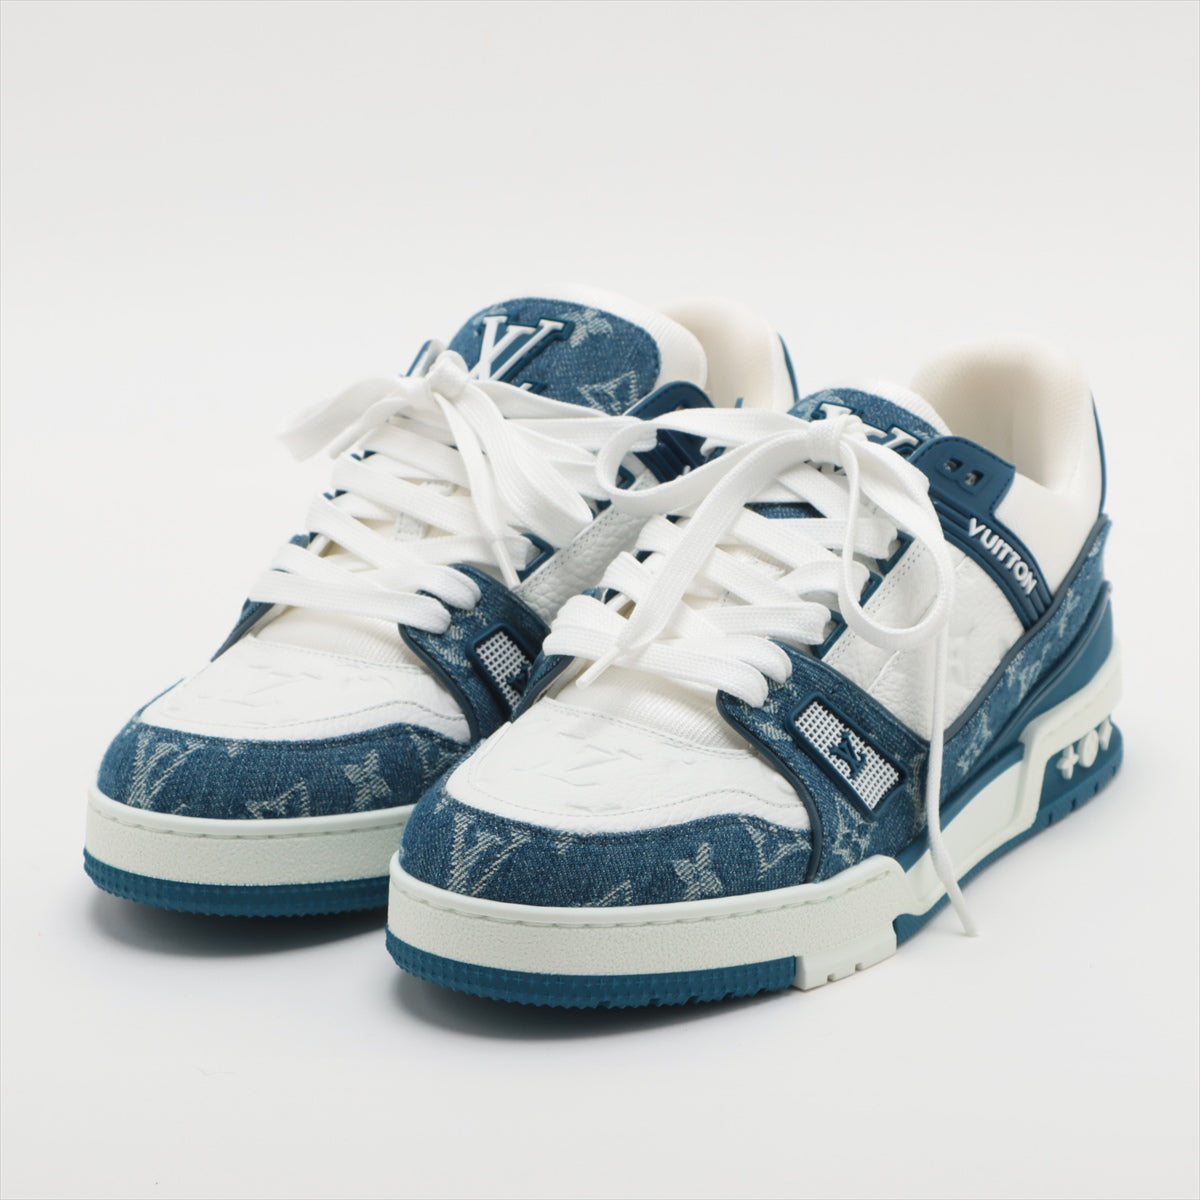 Louis Vuitton LV Trainer Line 23 years Denim & leather Sneakers 7 1/2 Men's Blue x white BM0213 Monogram denim